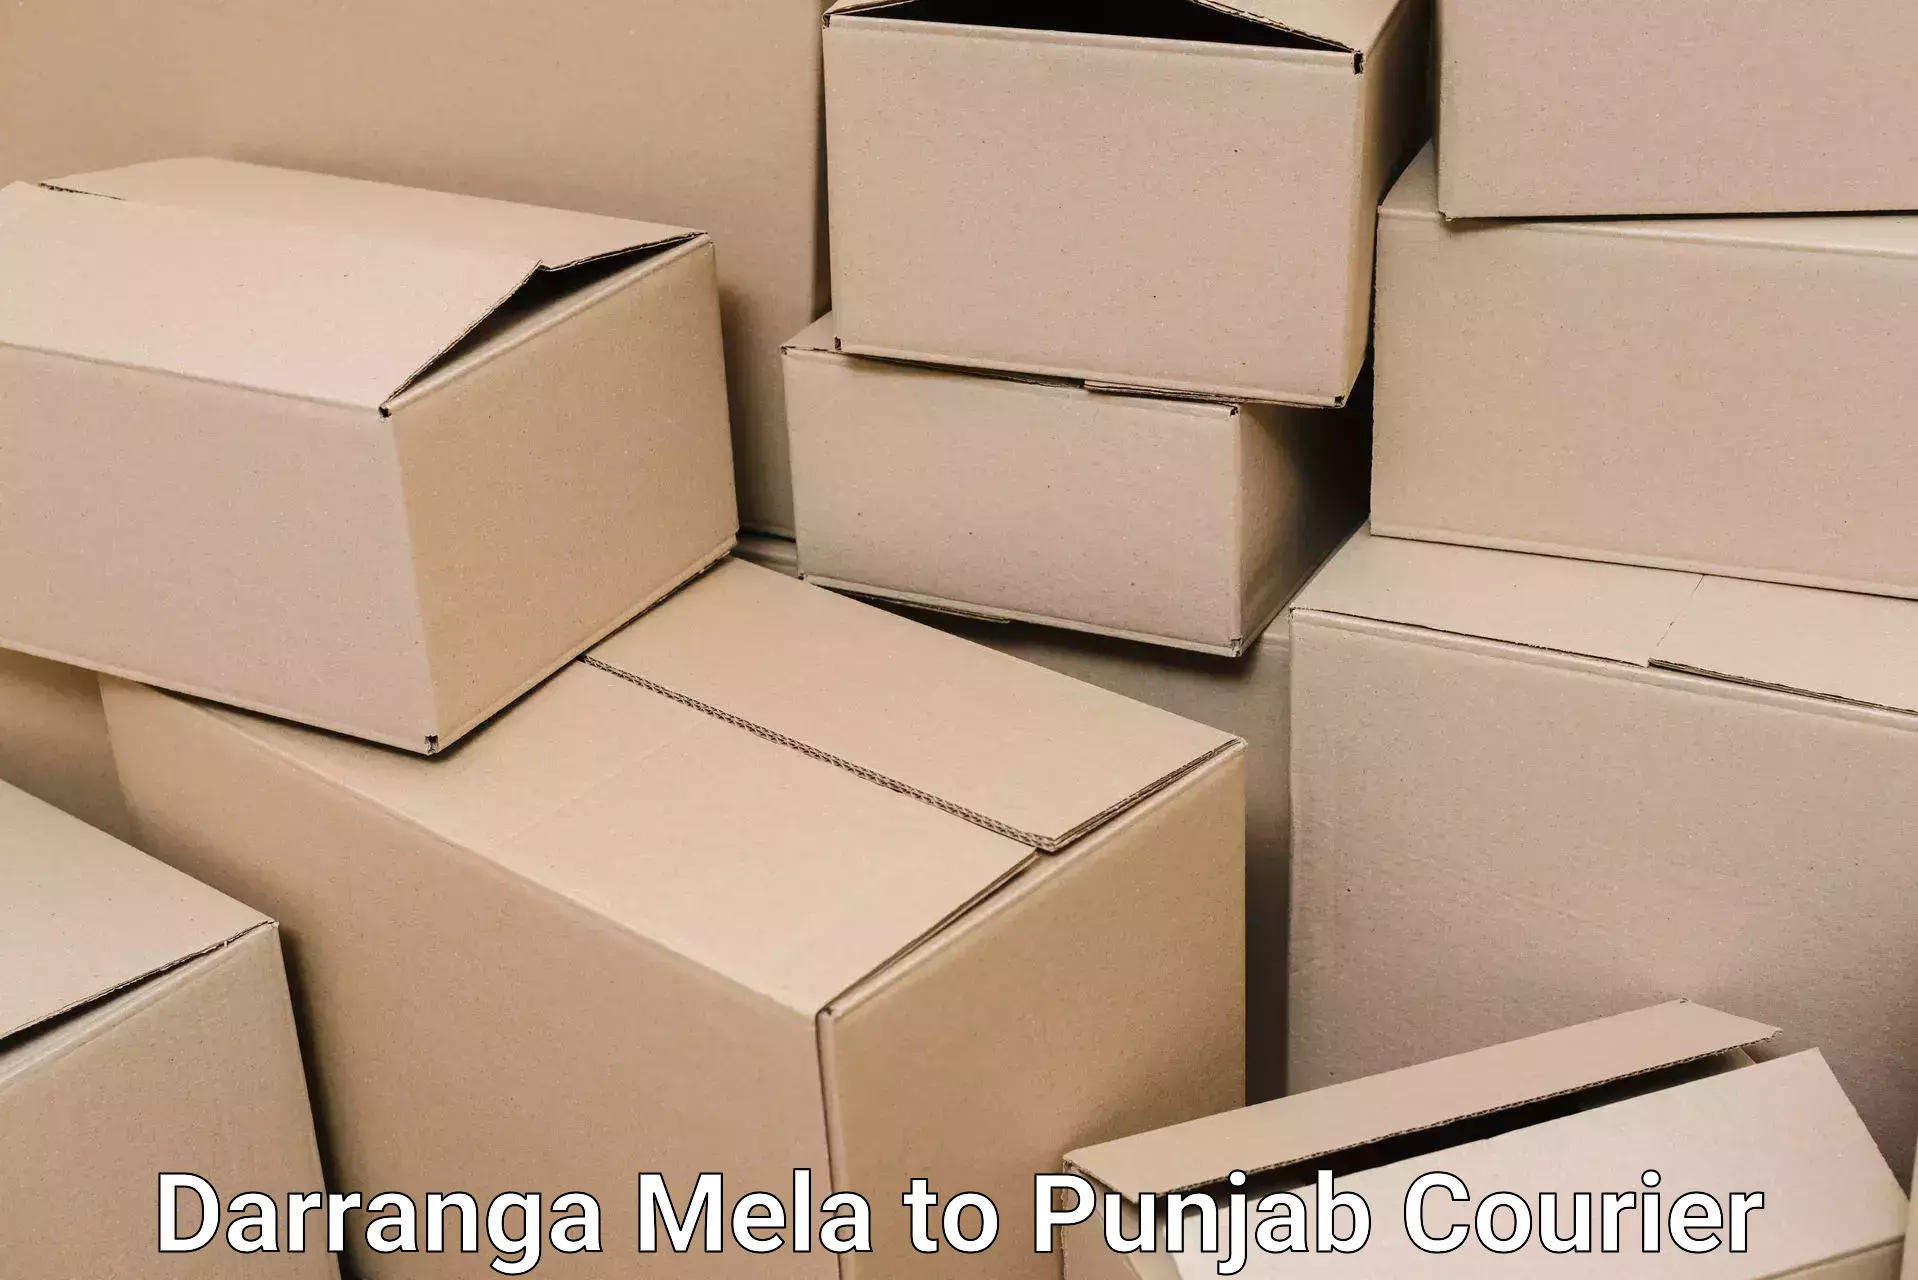 Efficient relocation services in Darranga Mela to Dhuri